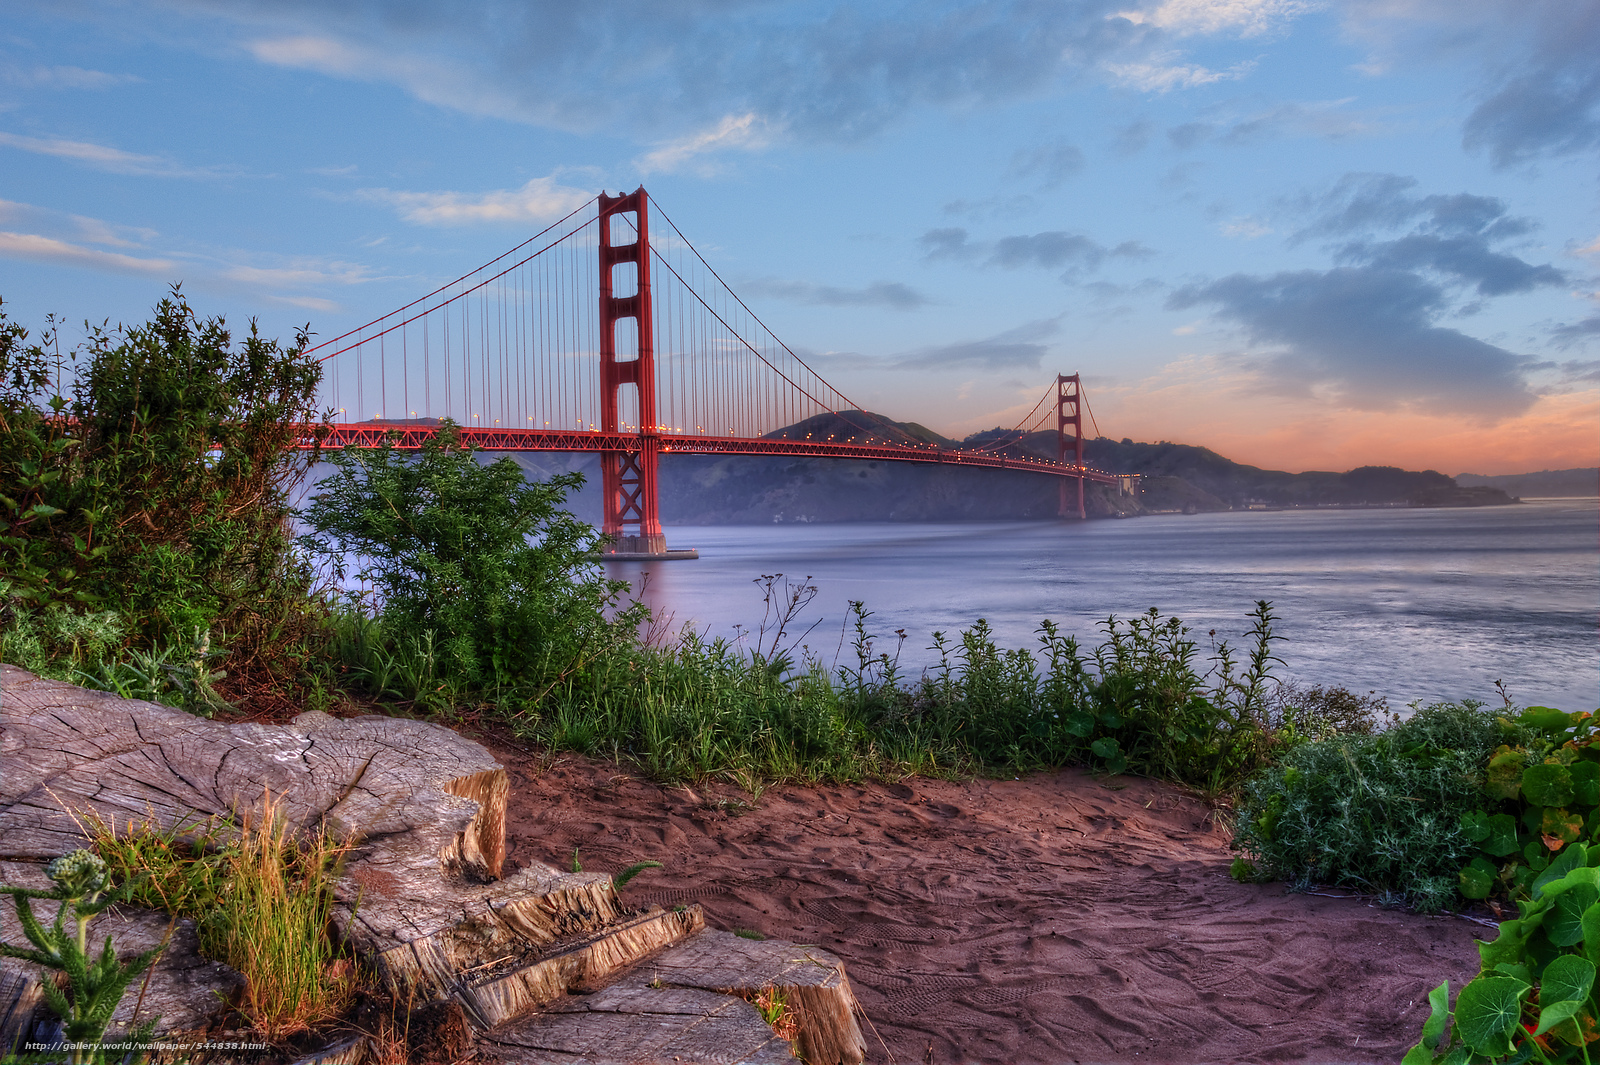 Download wallpaper Frisco, Golden Gate, bridge, landscape